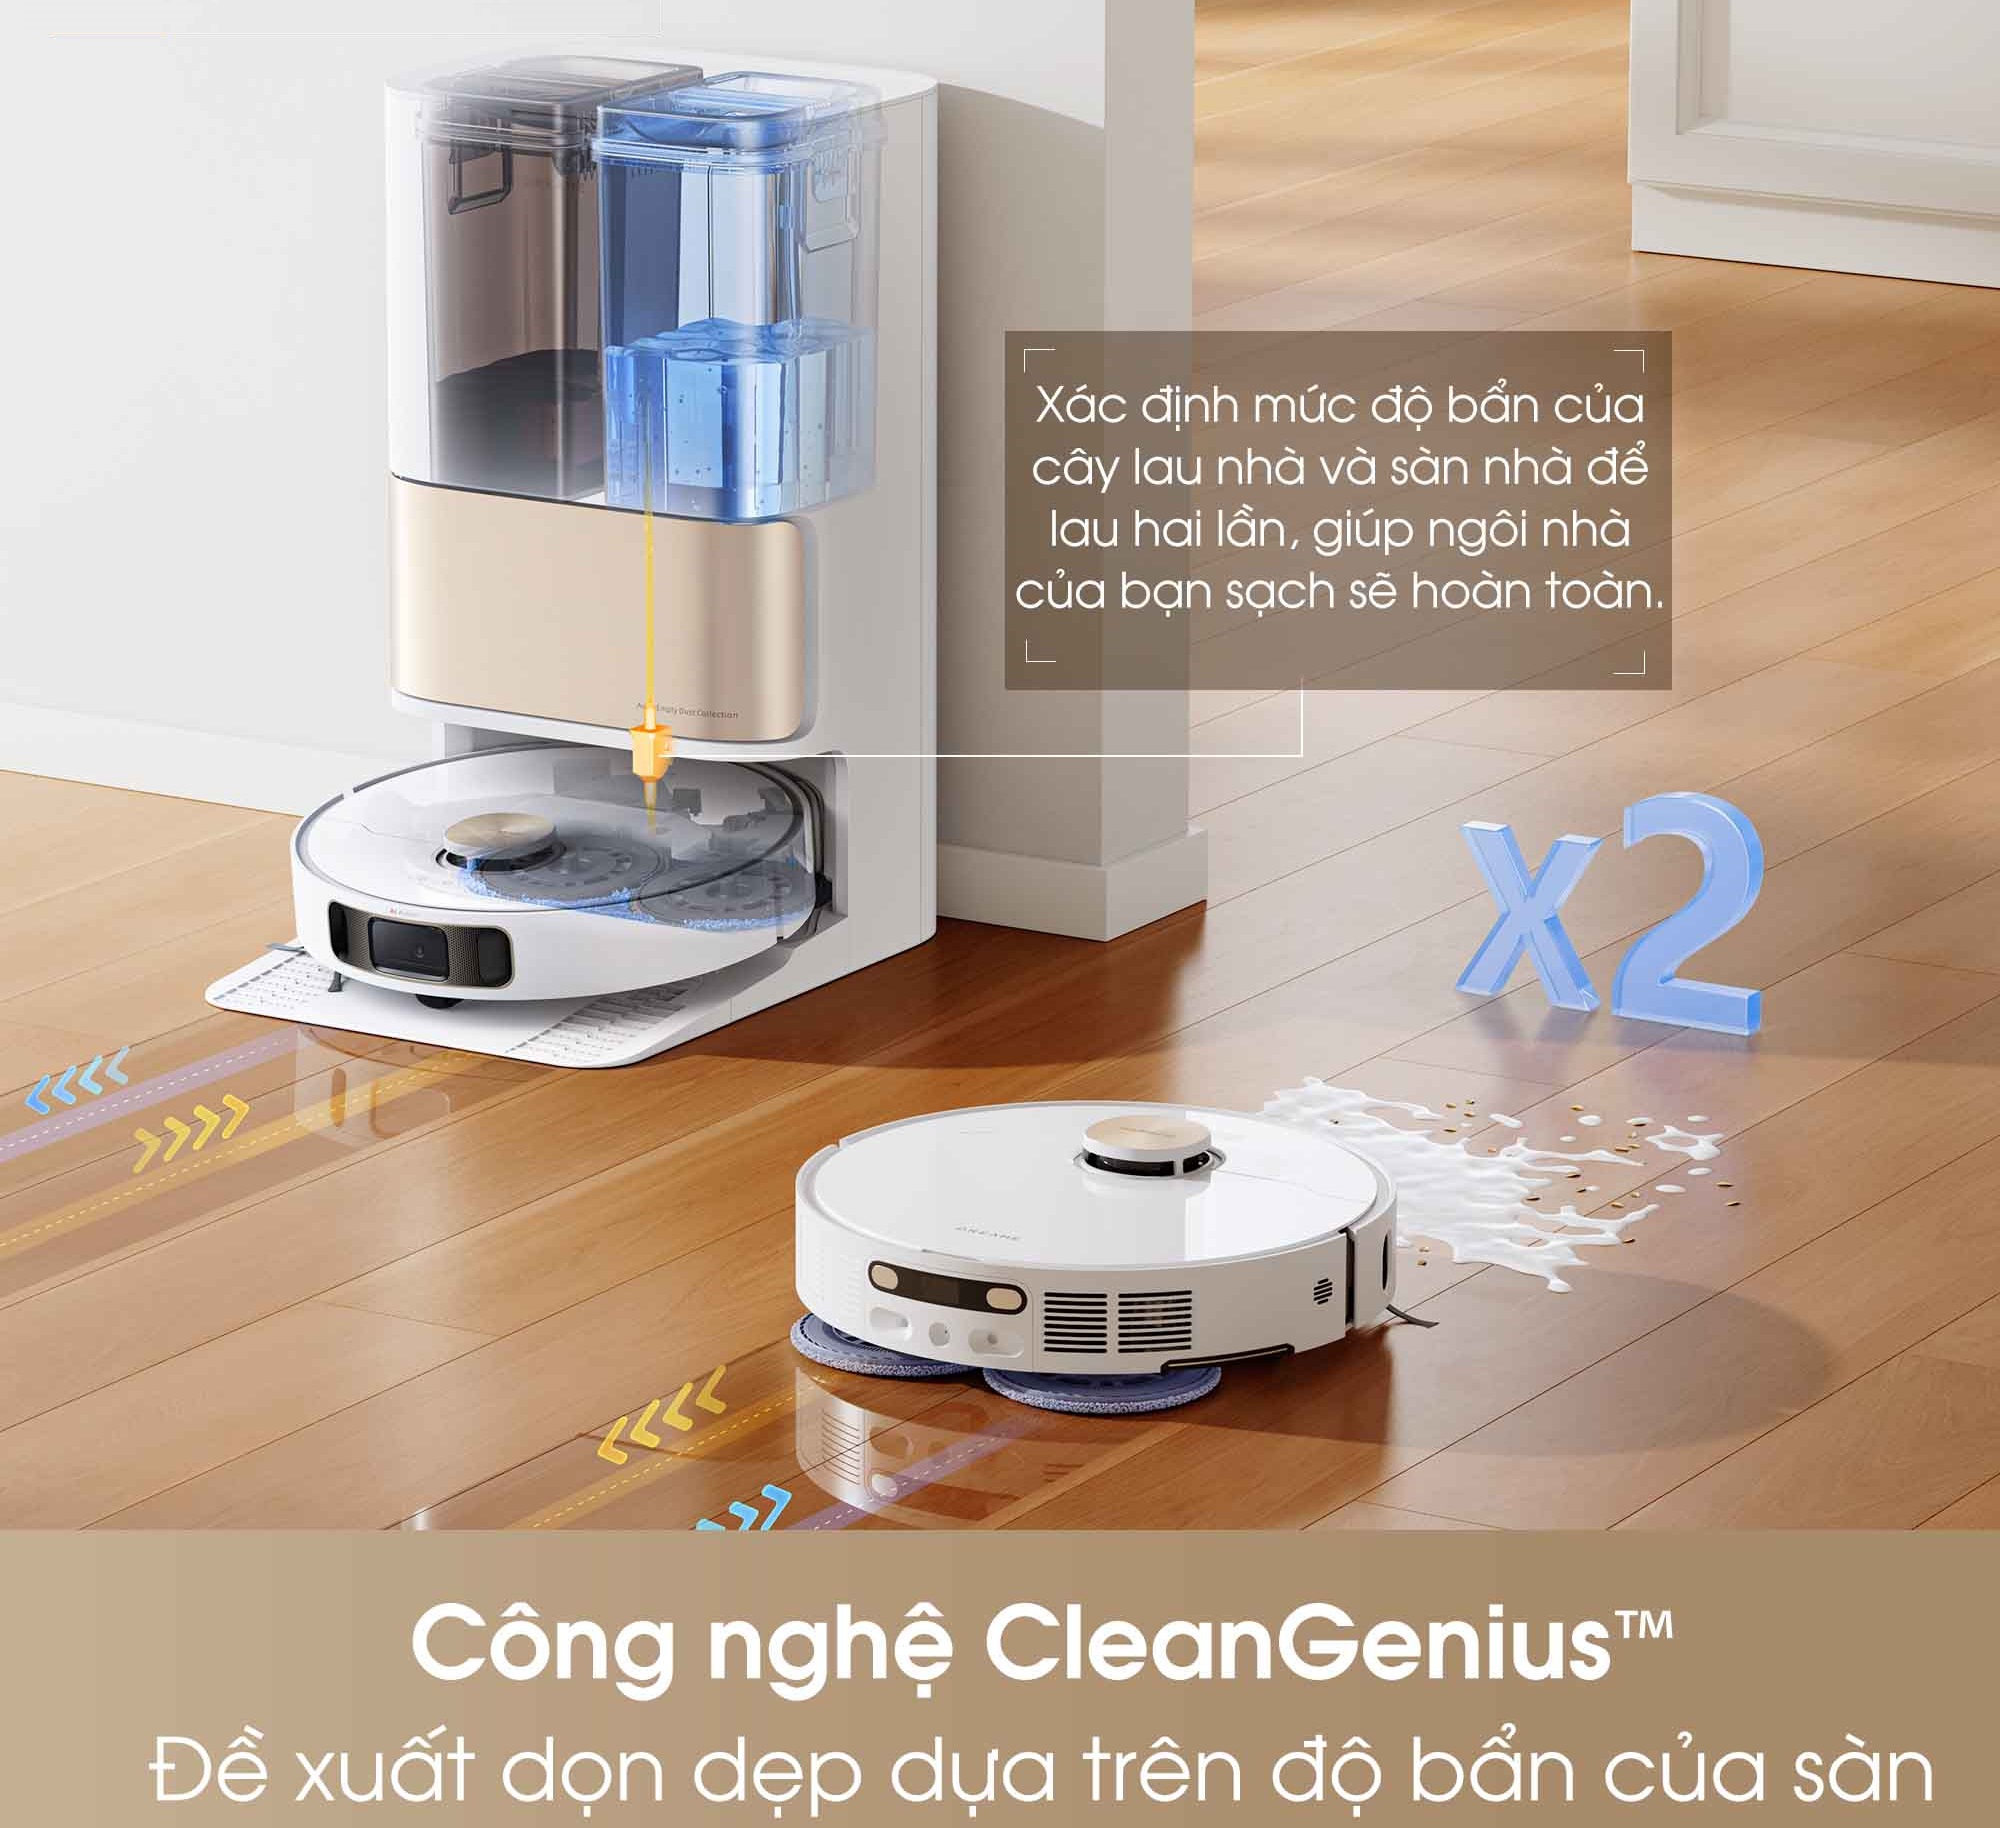 vietnam robotics robot dreame l10s pro ultra cong nghe CleanGenius™